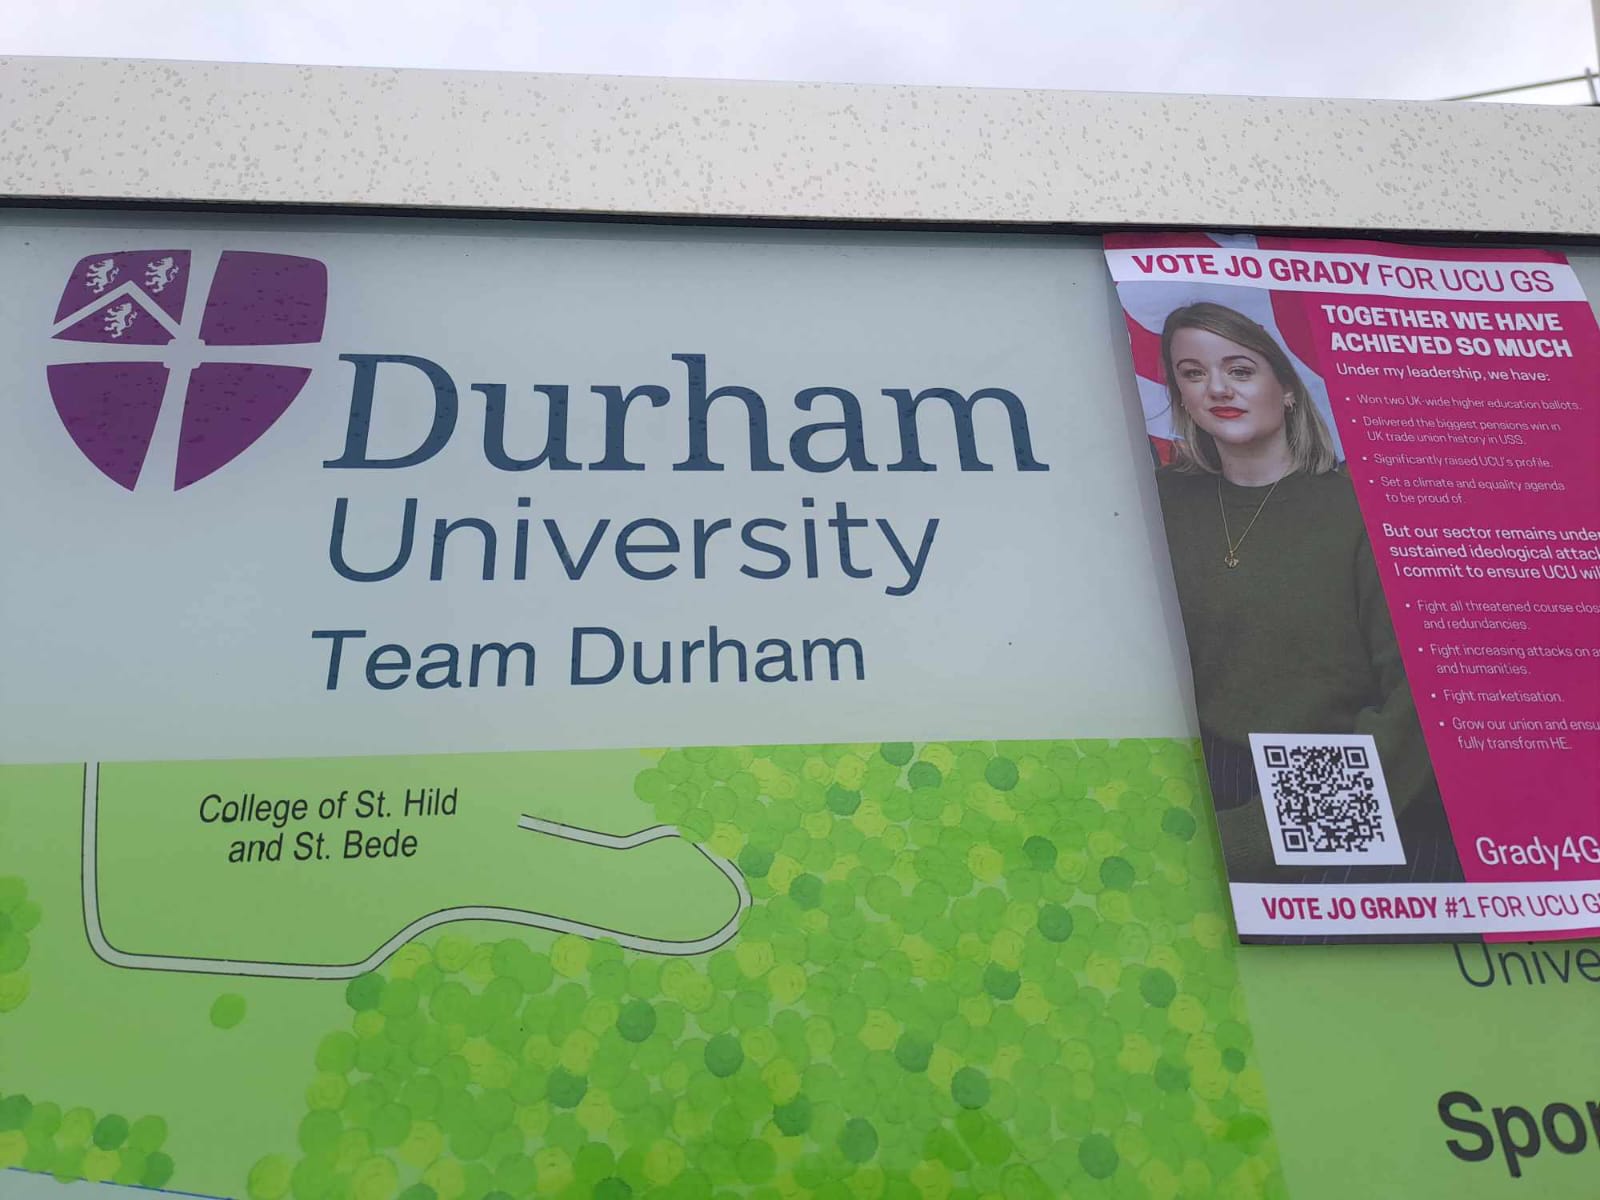 Grady4GS leaflet stuck up on a large map of Durham University